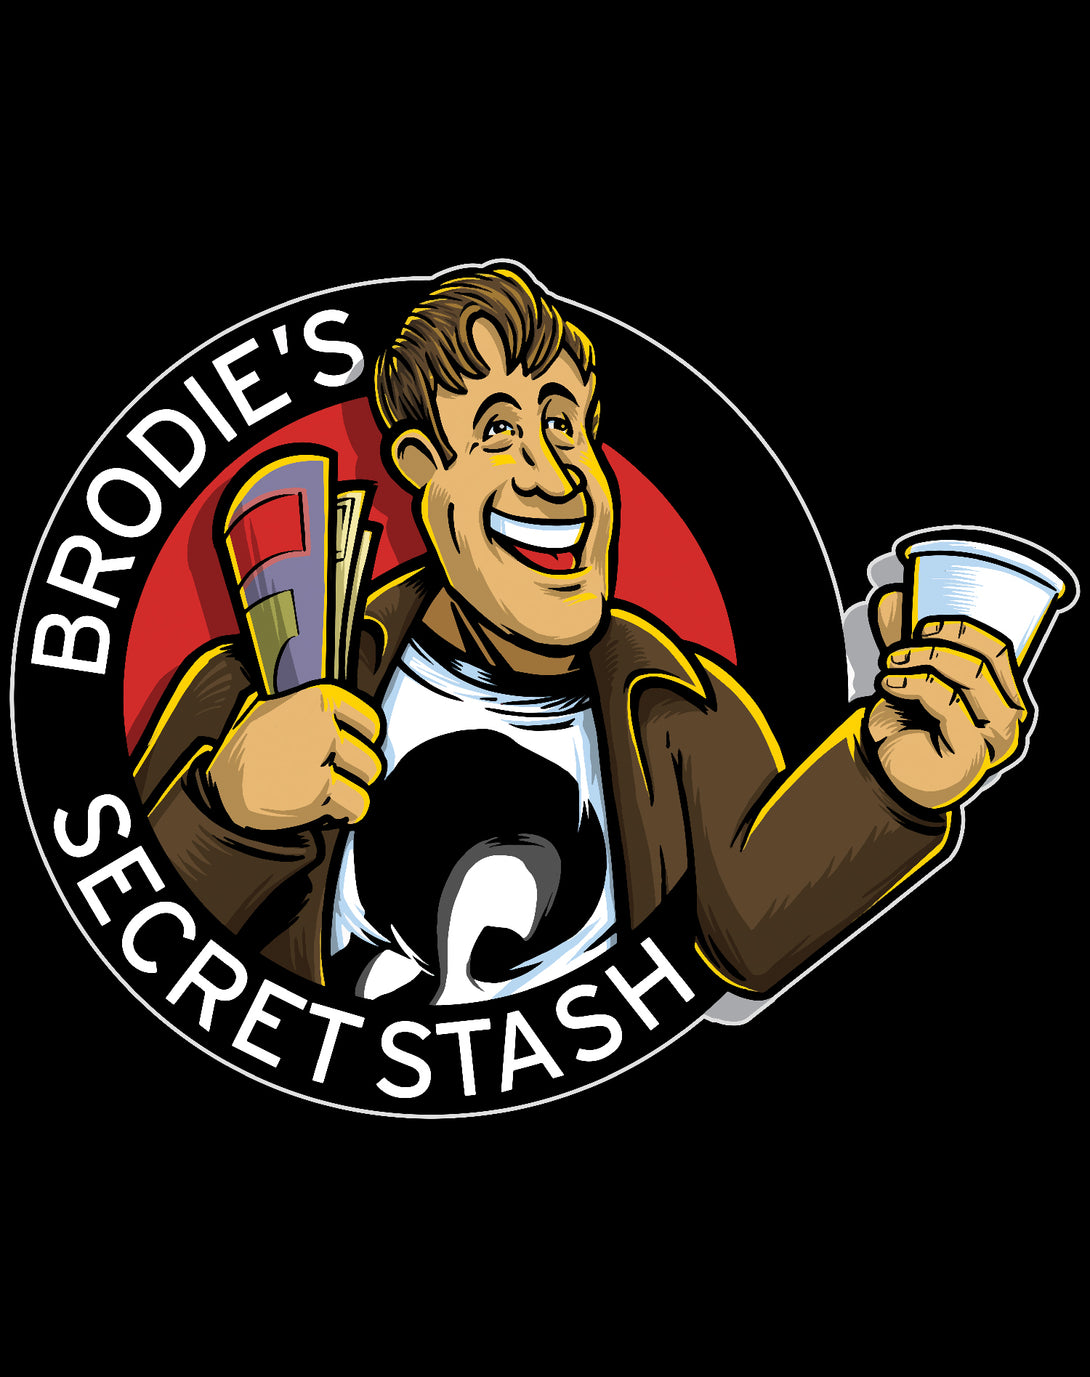 Kevin Smith Jay & Silent Bob Reboot Brodie's Secret Stash Comic Book Store Logo Official Sweatshirt Black - Urban Species Design Close Up